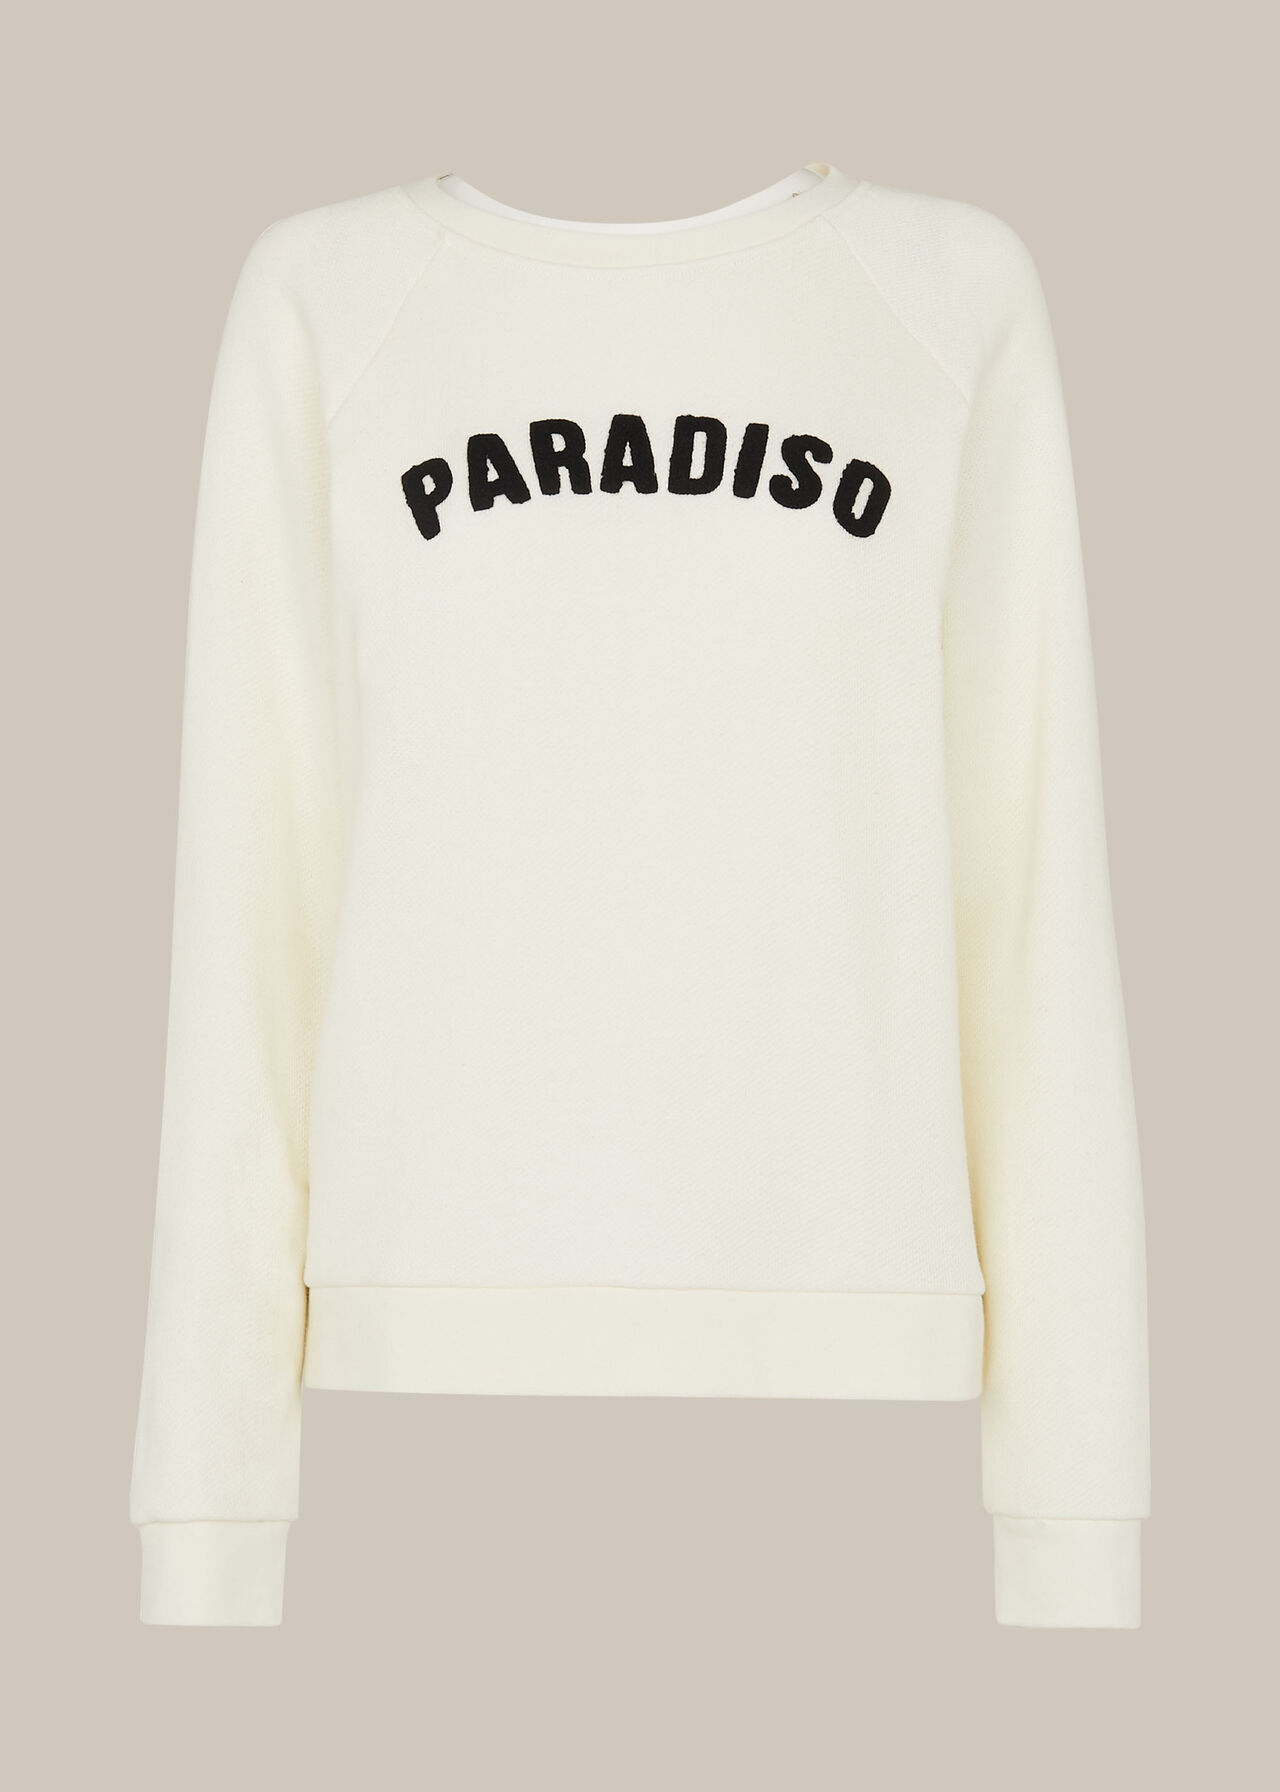 Paradiso Logo Sweatshirt